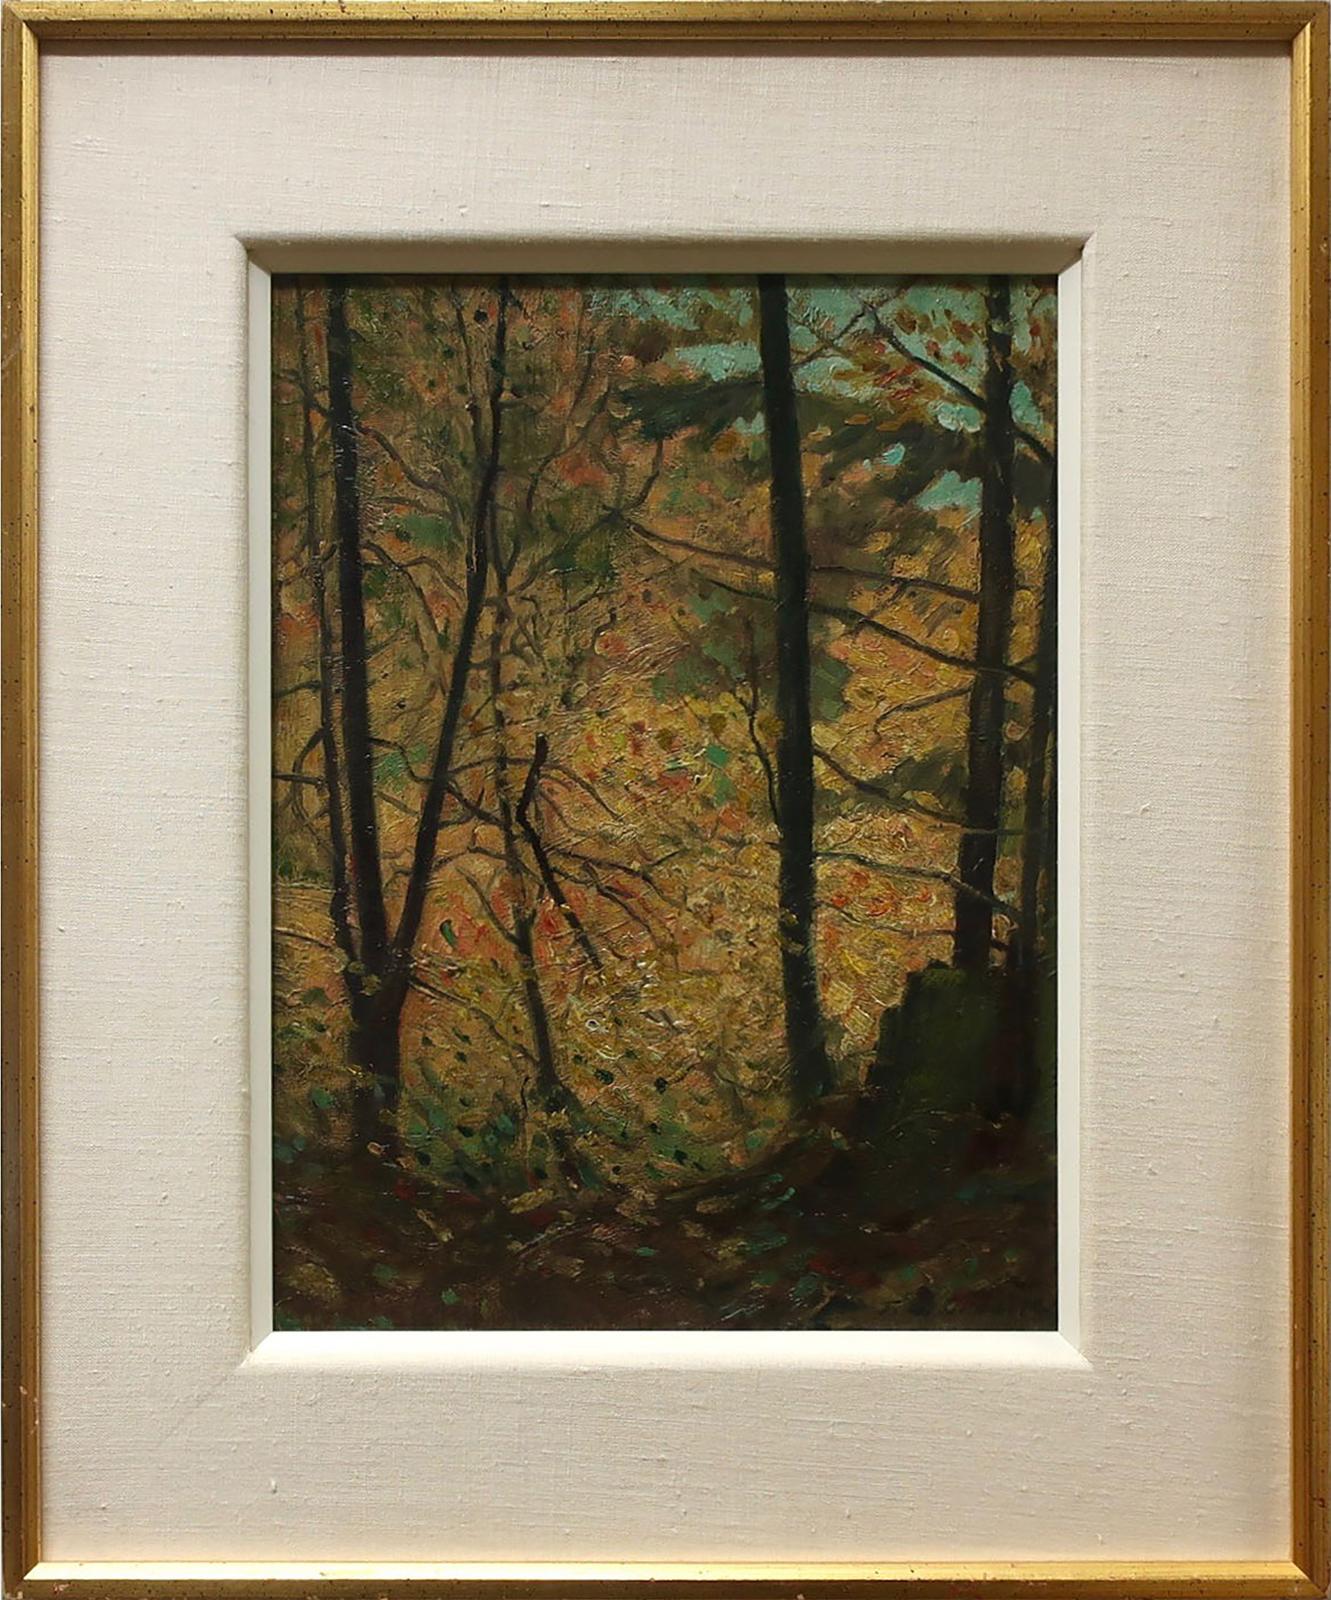 Thomas Garland Greene (1875-1955) - Fall Woods